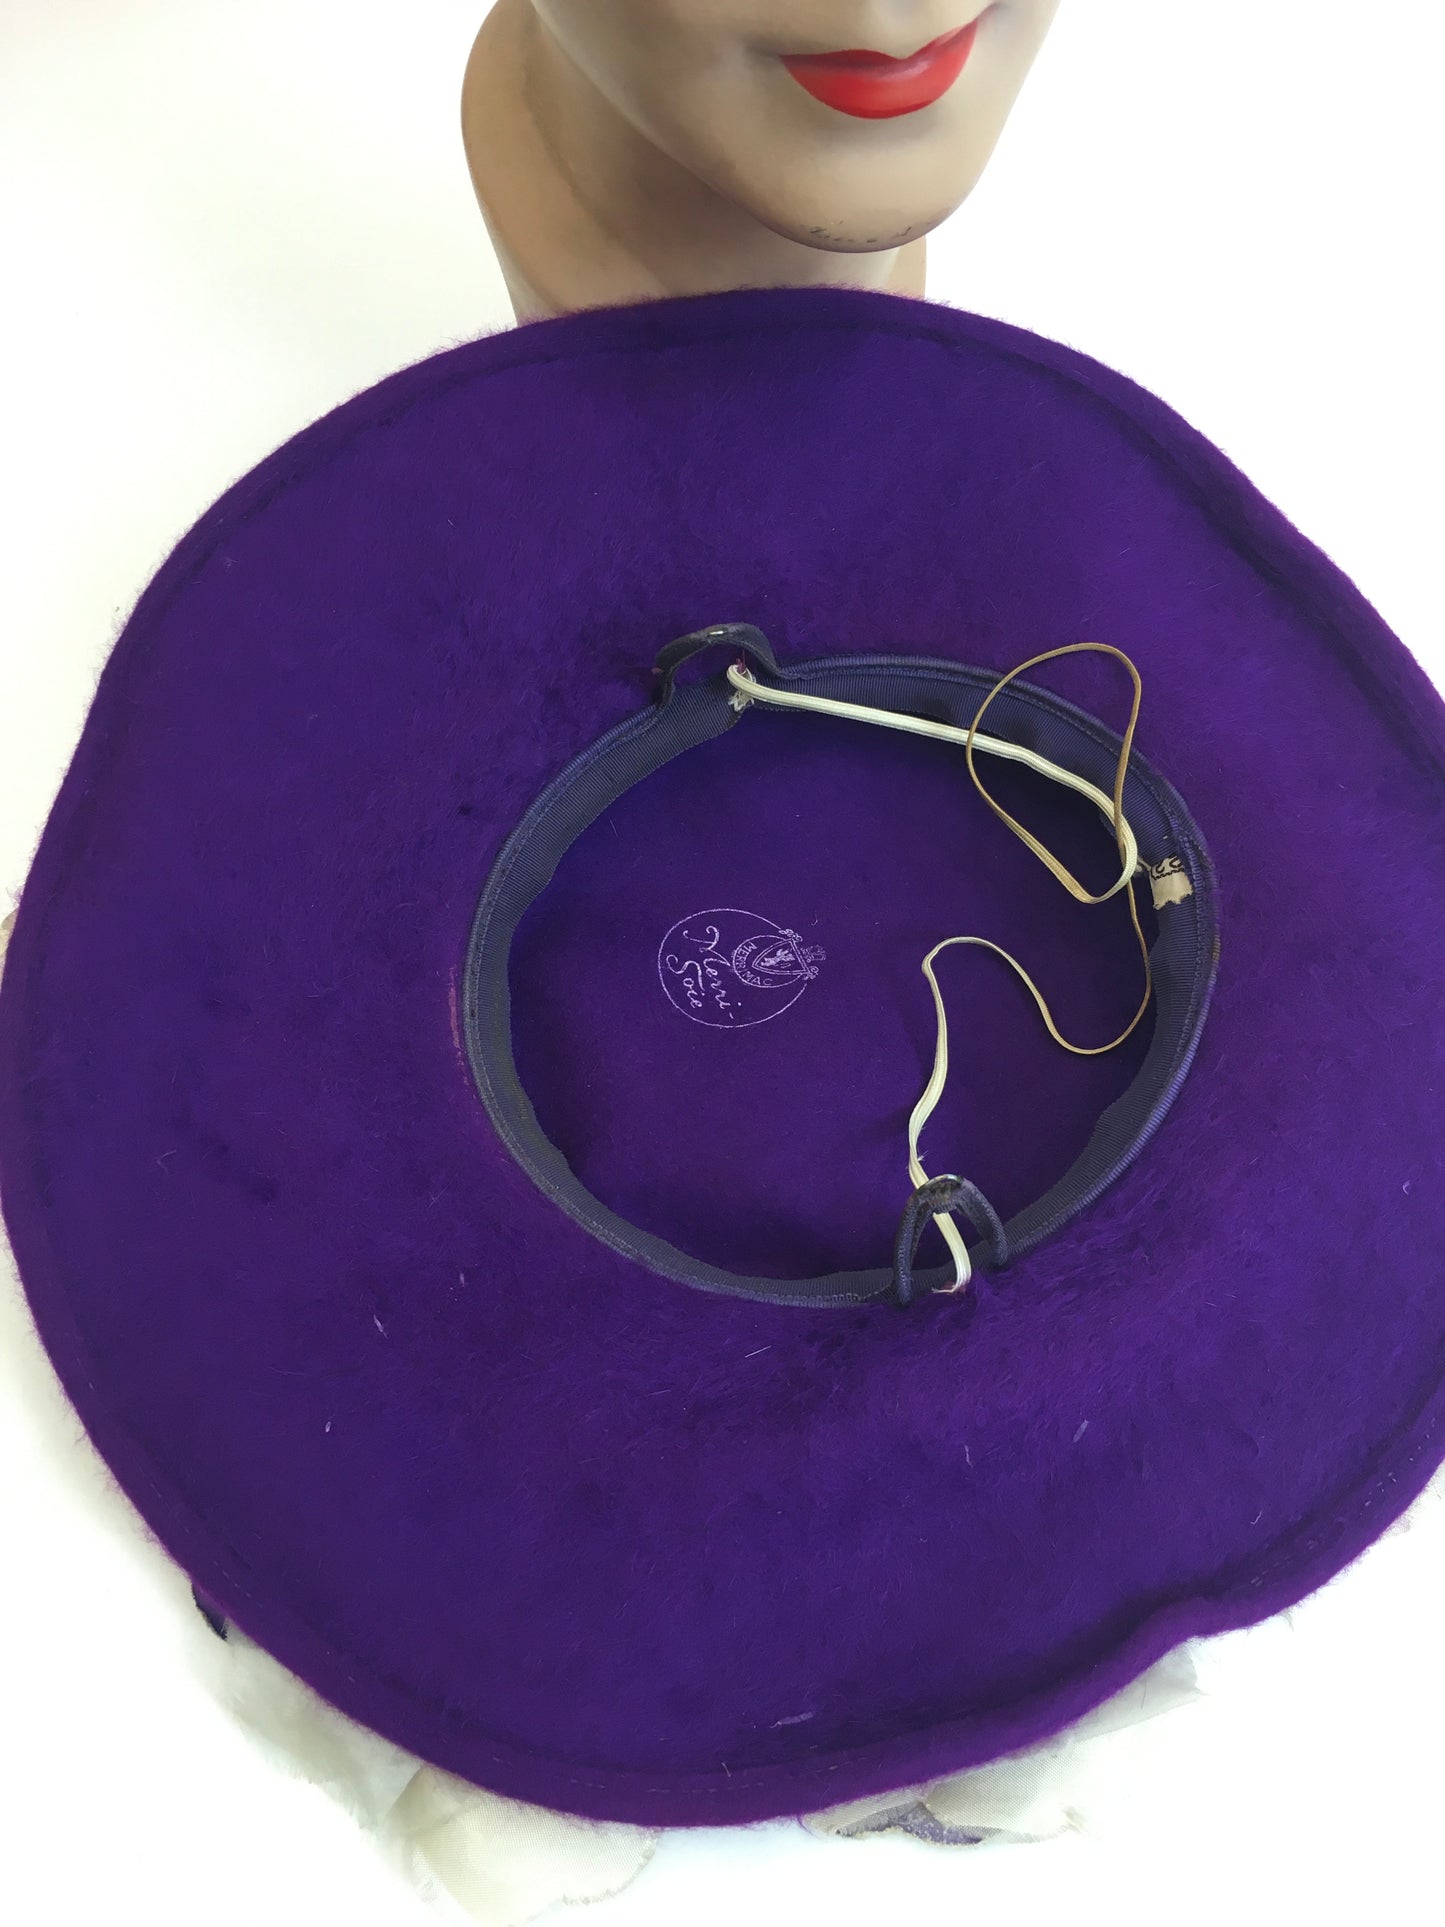 Original 1940’s/ 1950’s Merrimac Platter Hat - In Cadbury Purple with Floral Millinery